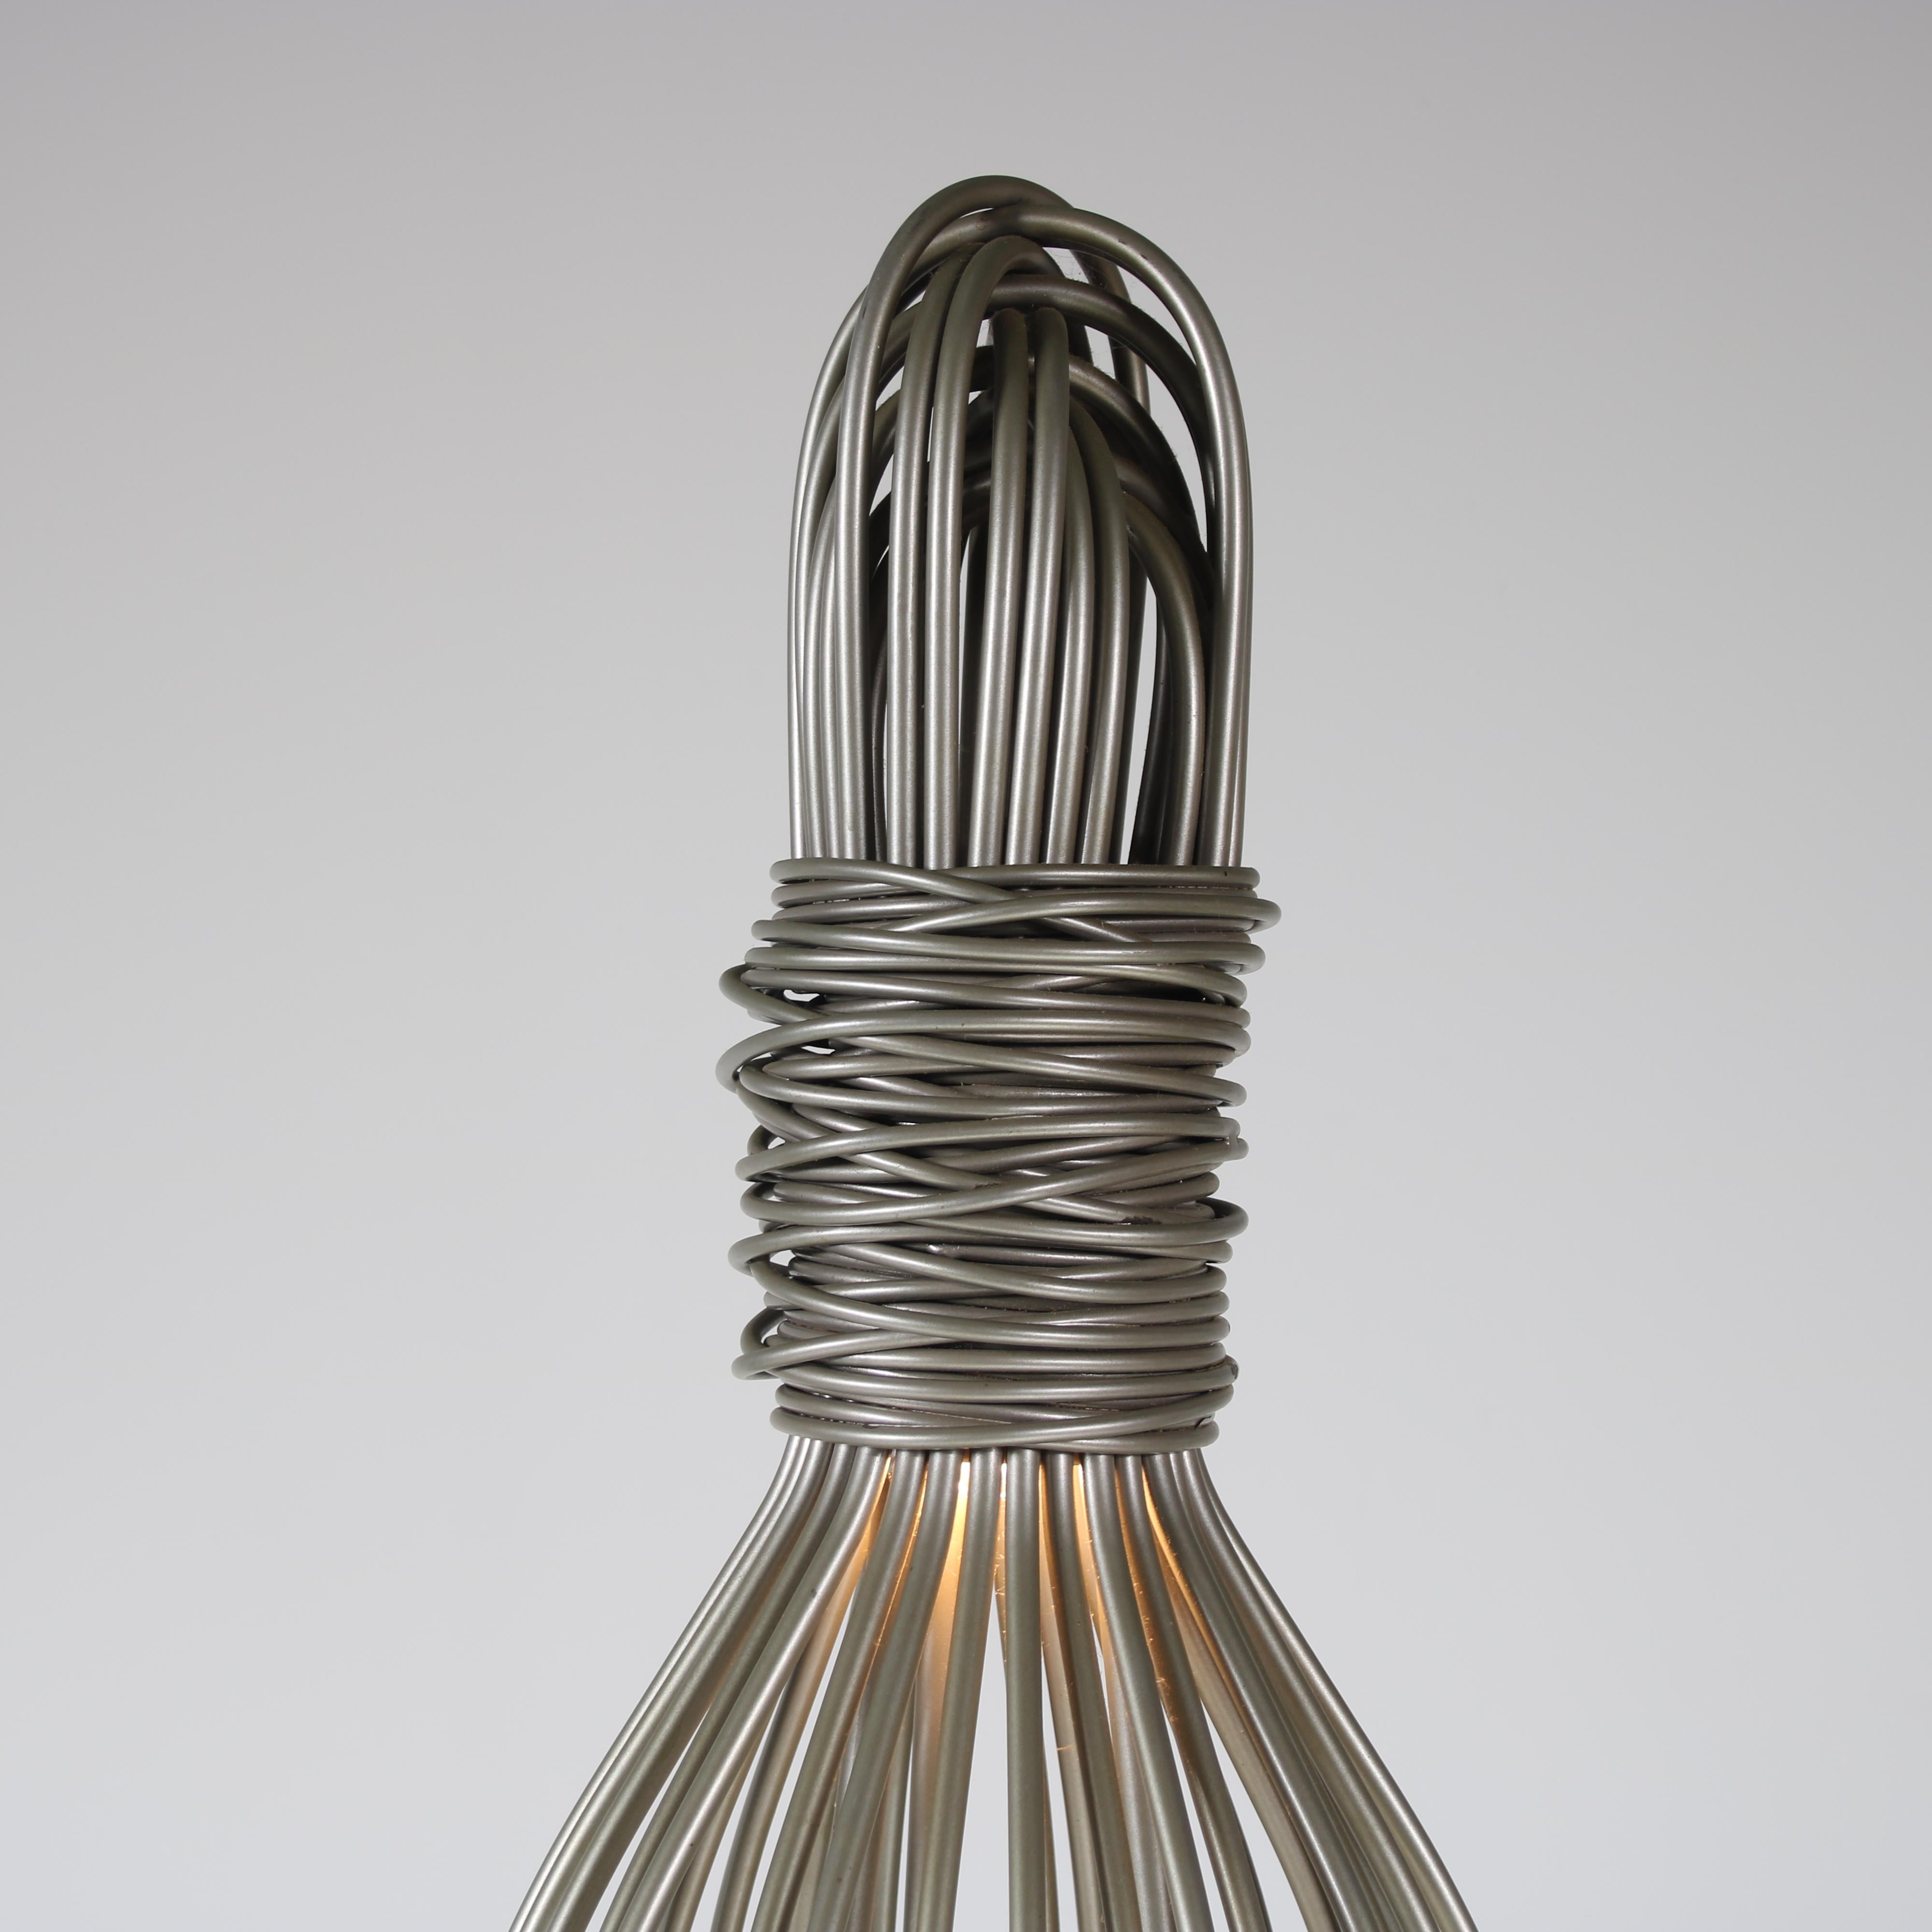 European “Hugo” Floor Lamp / Light Sculpture by Jean-Francois Crochet for Terzani, Italy 